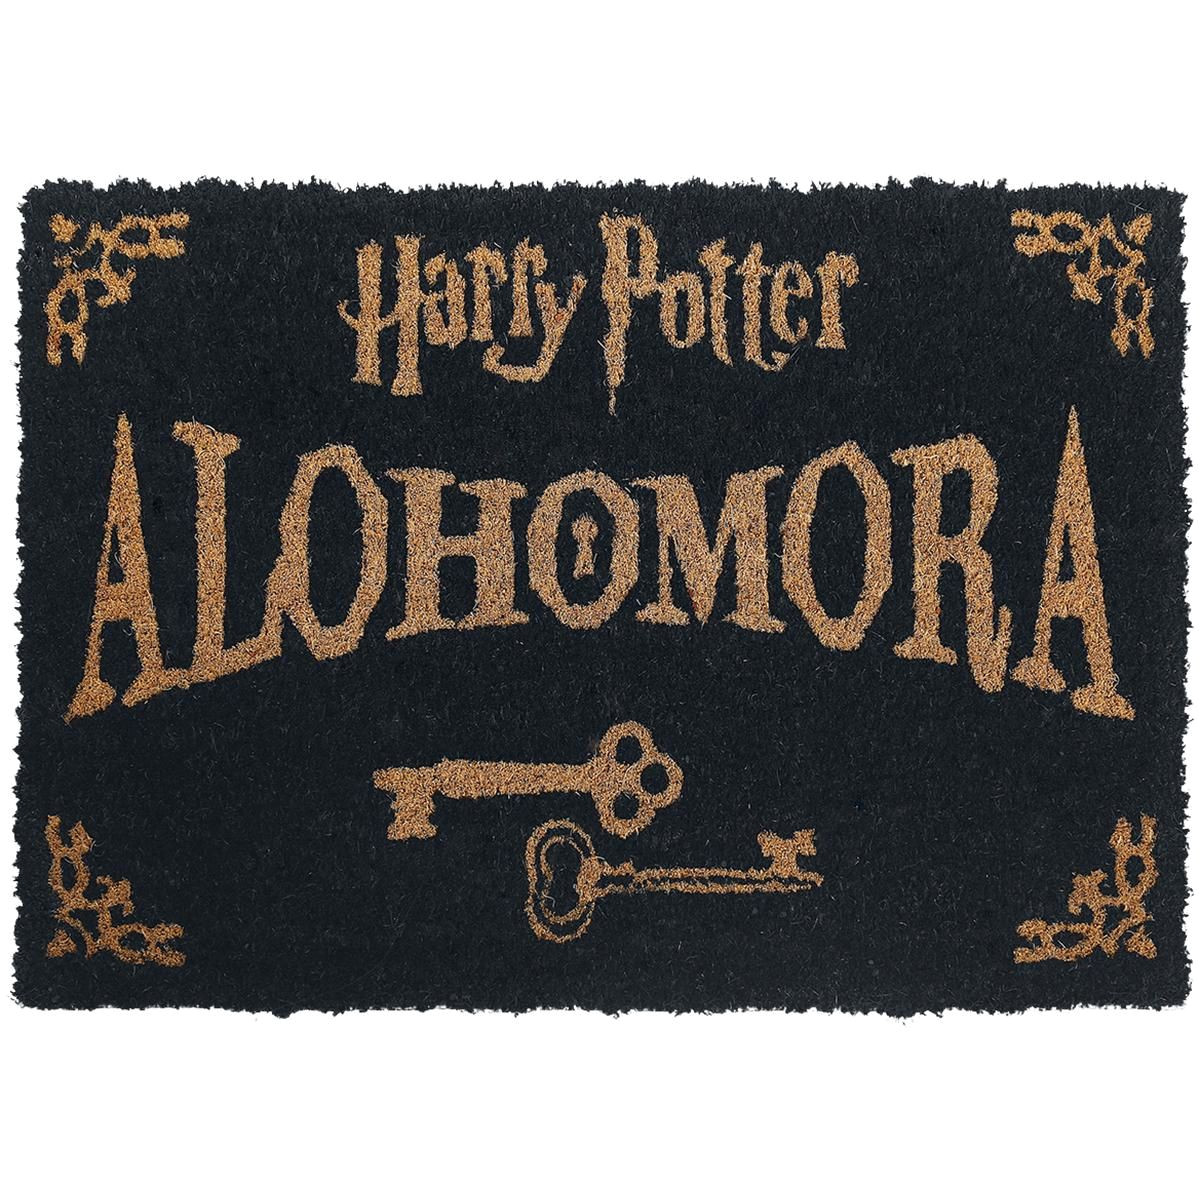 harry potter alohomora doormat measurements approx 40 x 60 cm materials